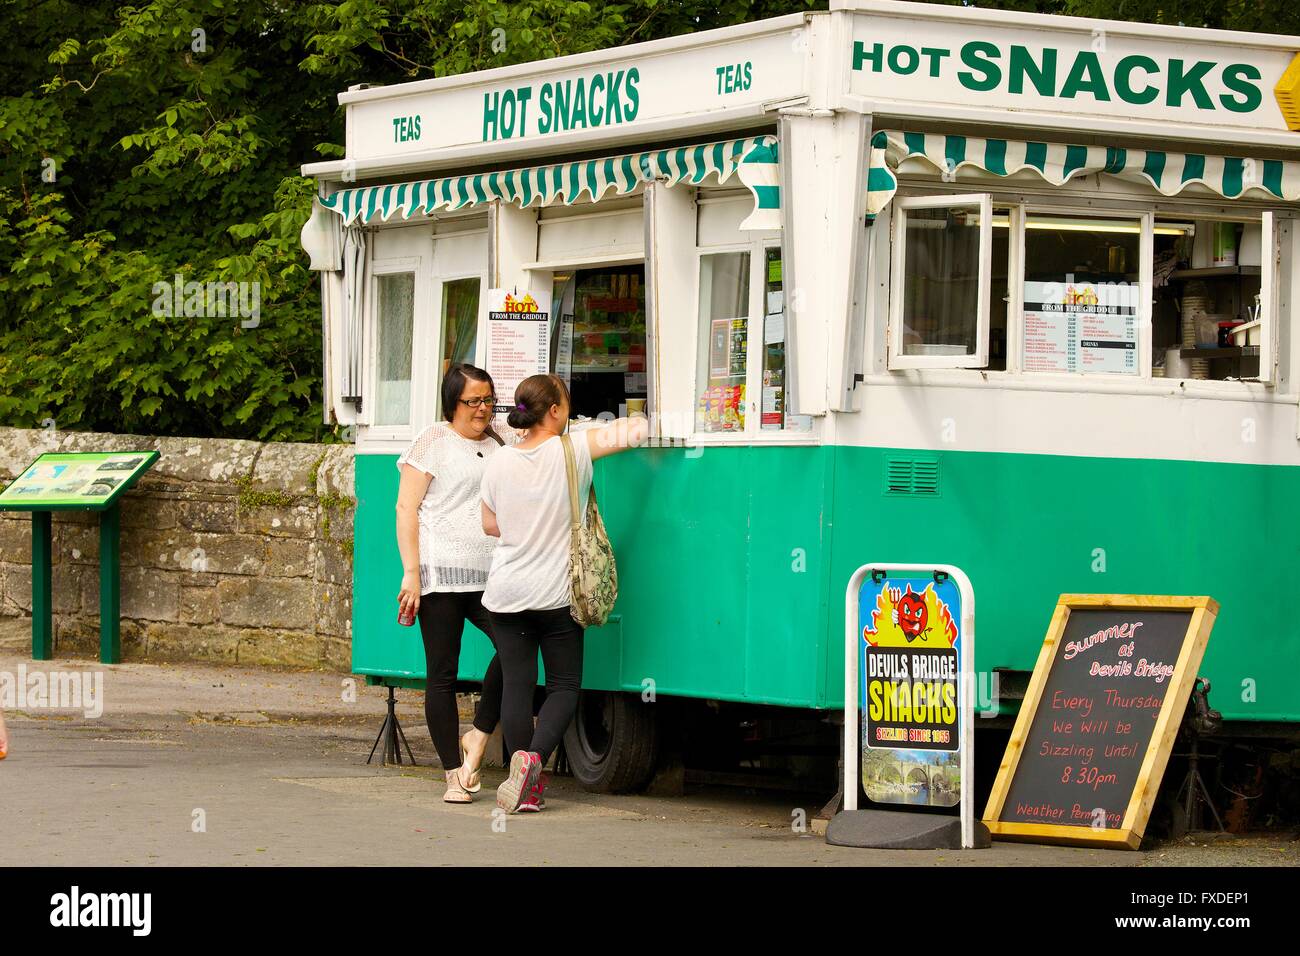 Zwei Frauen Snacks zu kaufen. Devils Bridge Snacks van, Teufelsbrücke, Kirkby Lonsdale, South Lakeland, Cumbria, England, UK. Stockfoto